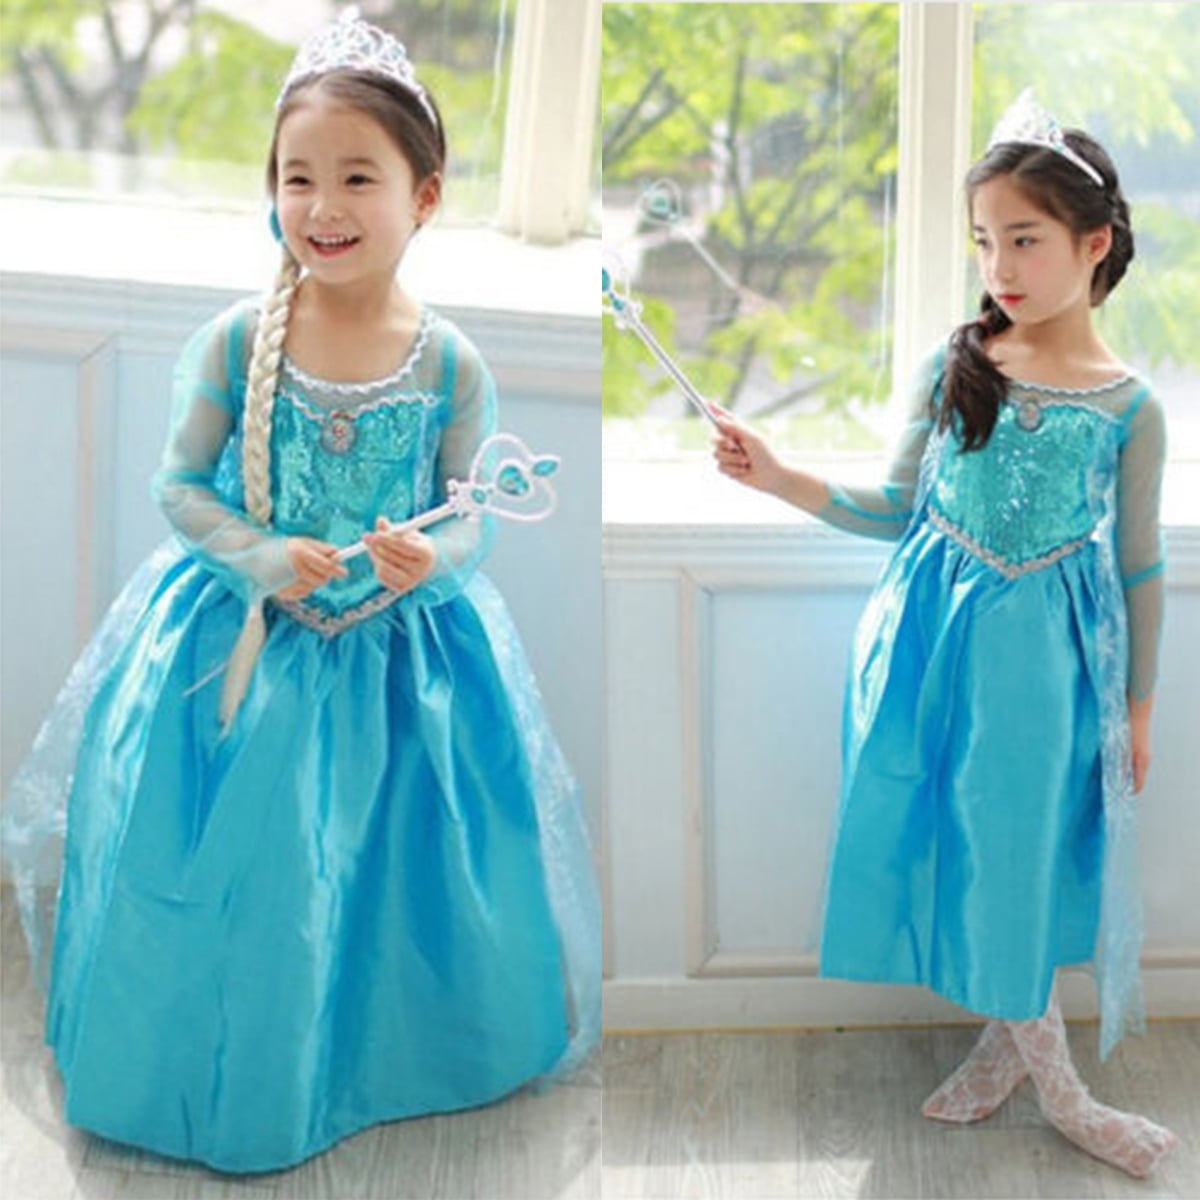 Babygirl Dress, Ice Blue Dress, Snow Queen Dress, Baby Tulle Dress,  Fairytale Dress - Etsy